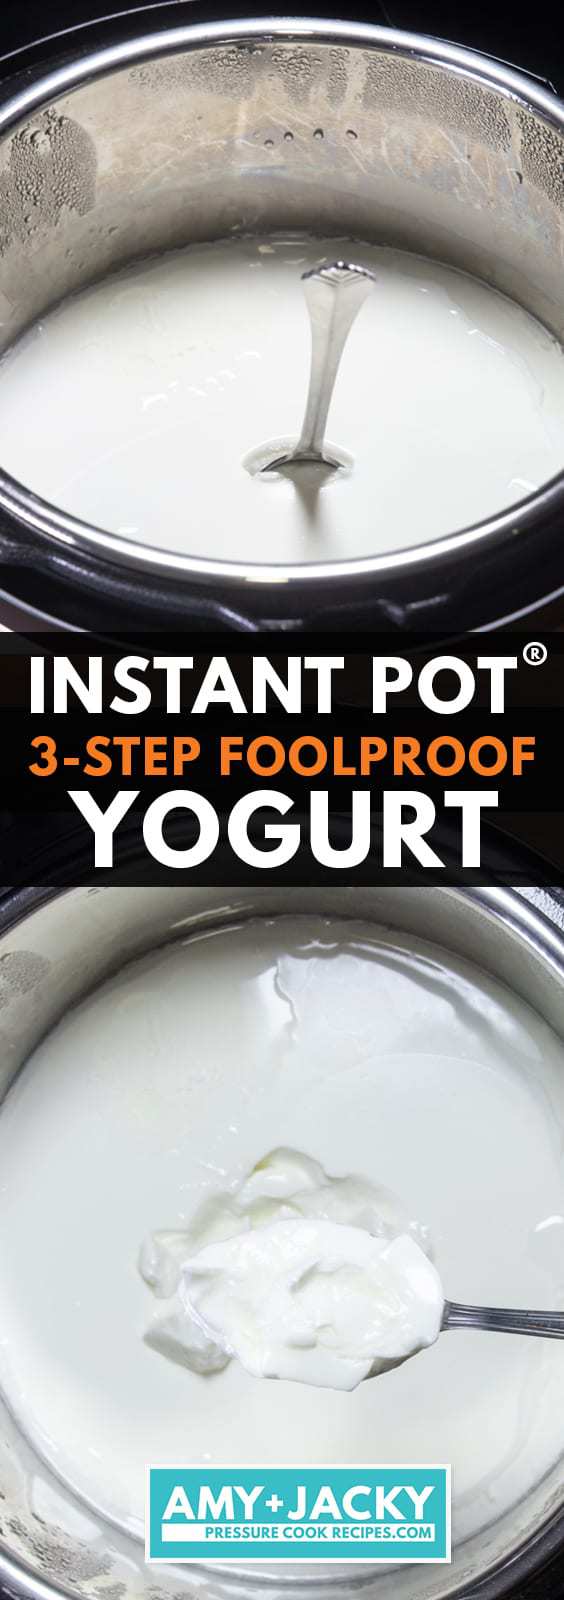 Instant Pot Yogurt | Instant Pot Yogurt No Boil | Instant Pot Yogurt Fairlife | Instant Pot Yogurt Cold Start  #AmyJacky #InstantPot #PressureCooker #recipe #keto #healthy #breakfast